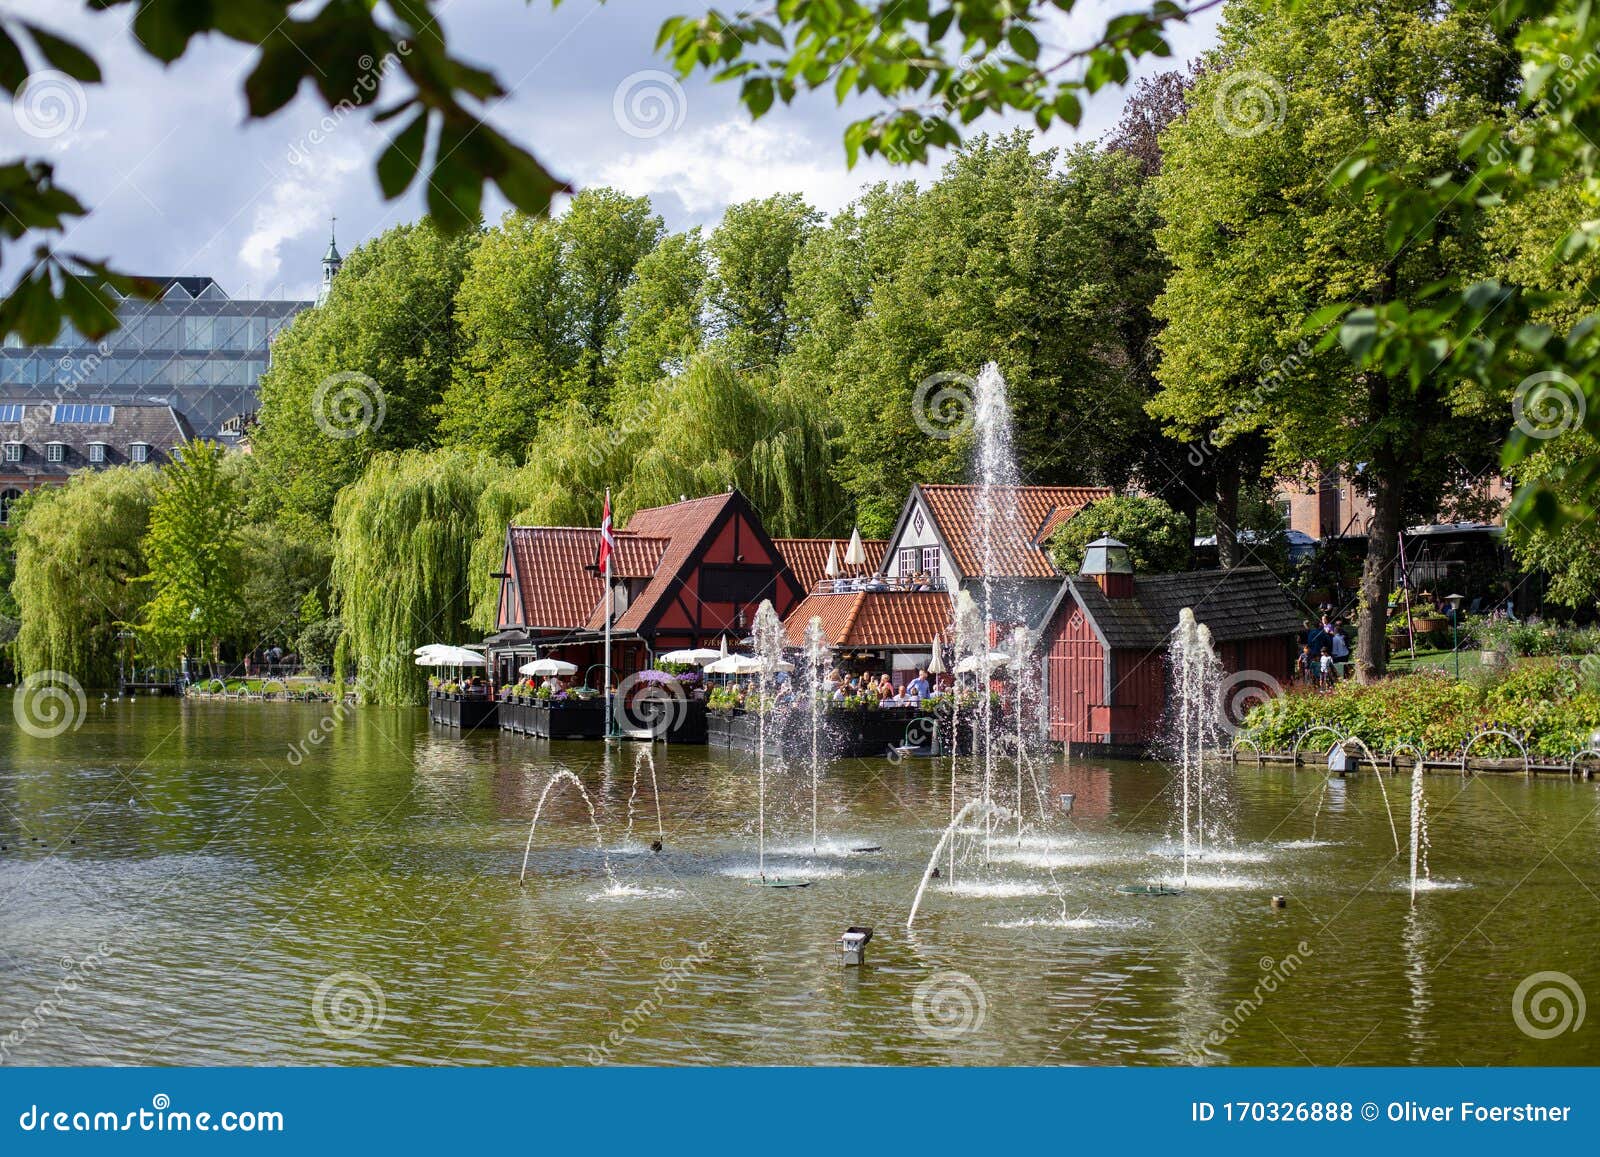 Tivoli Gardens In Copenhagen Denmark Editorial Stock Photo